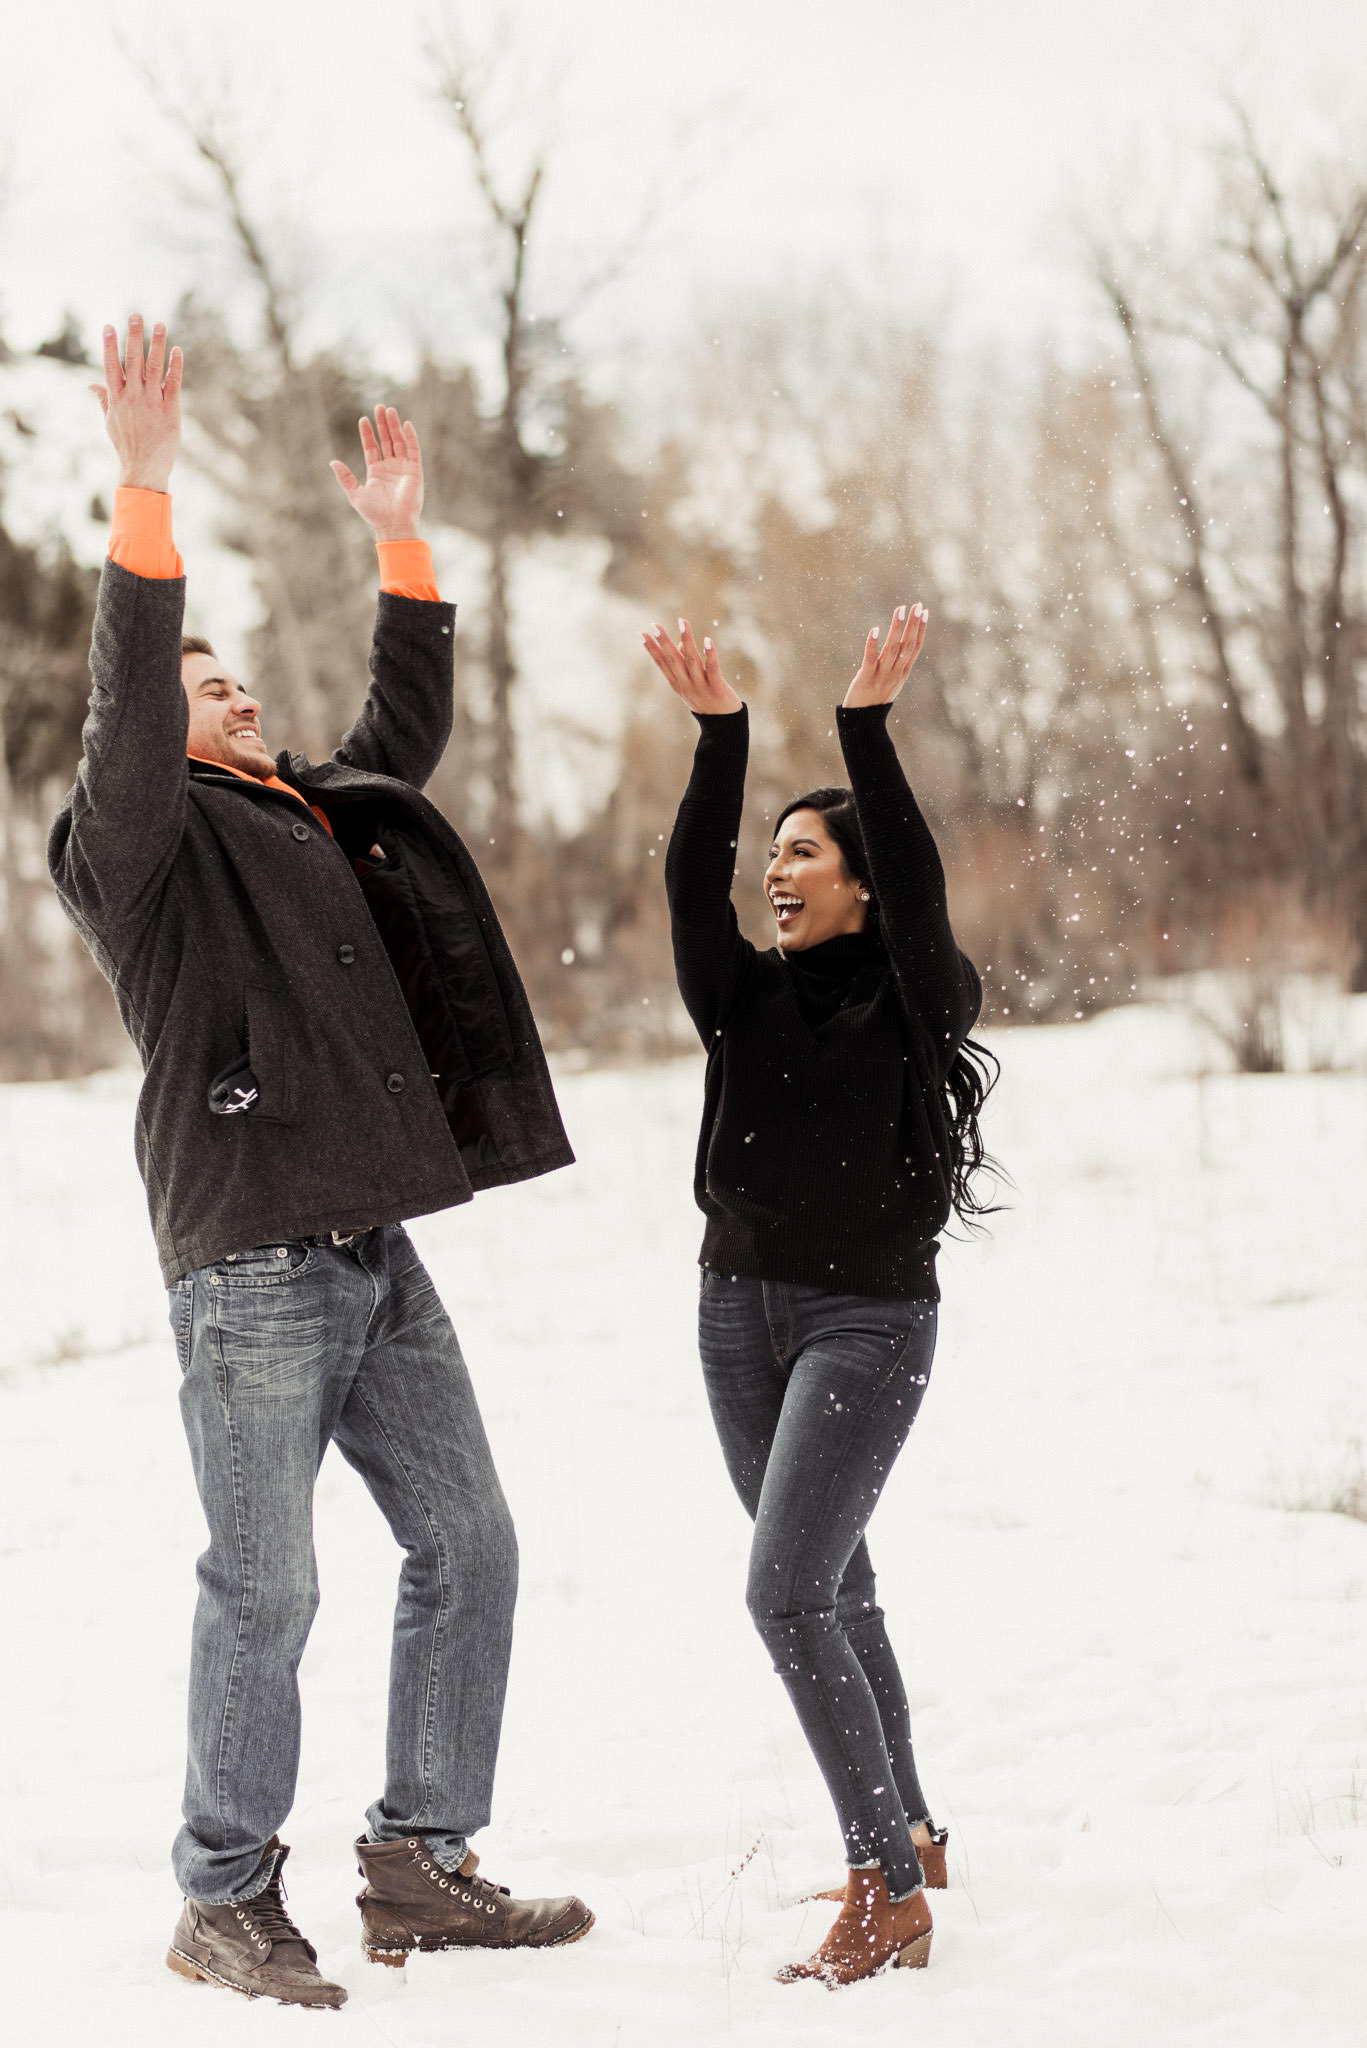 sandra-ryan-colorado-winter-snow-engagement-couples-valentines-red-houston-photographer-sm-39.jpg